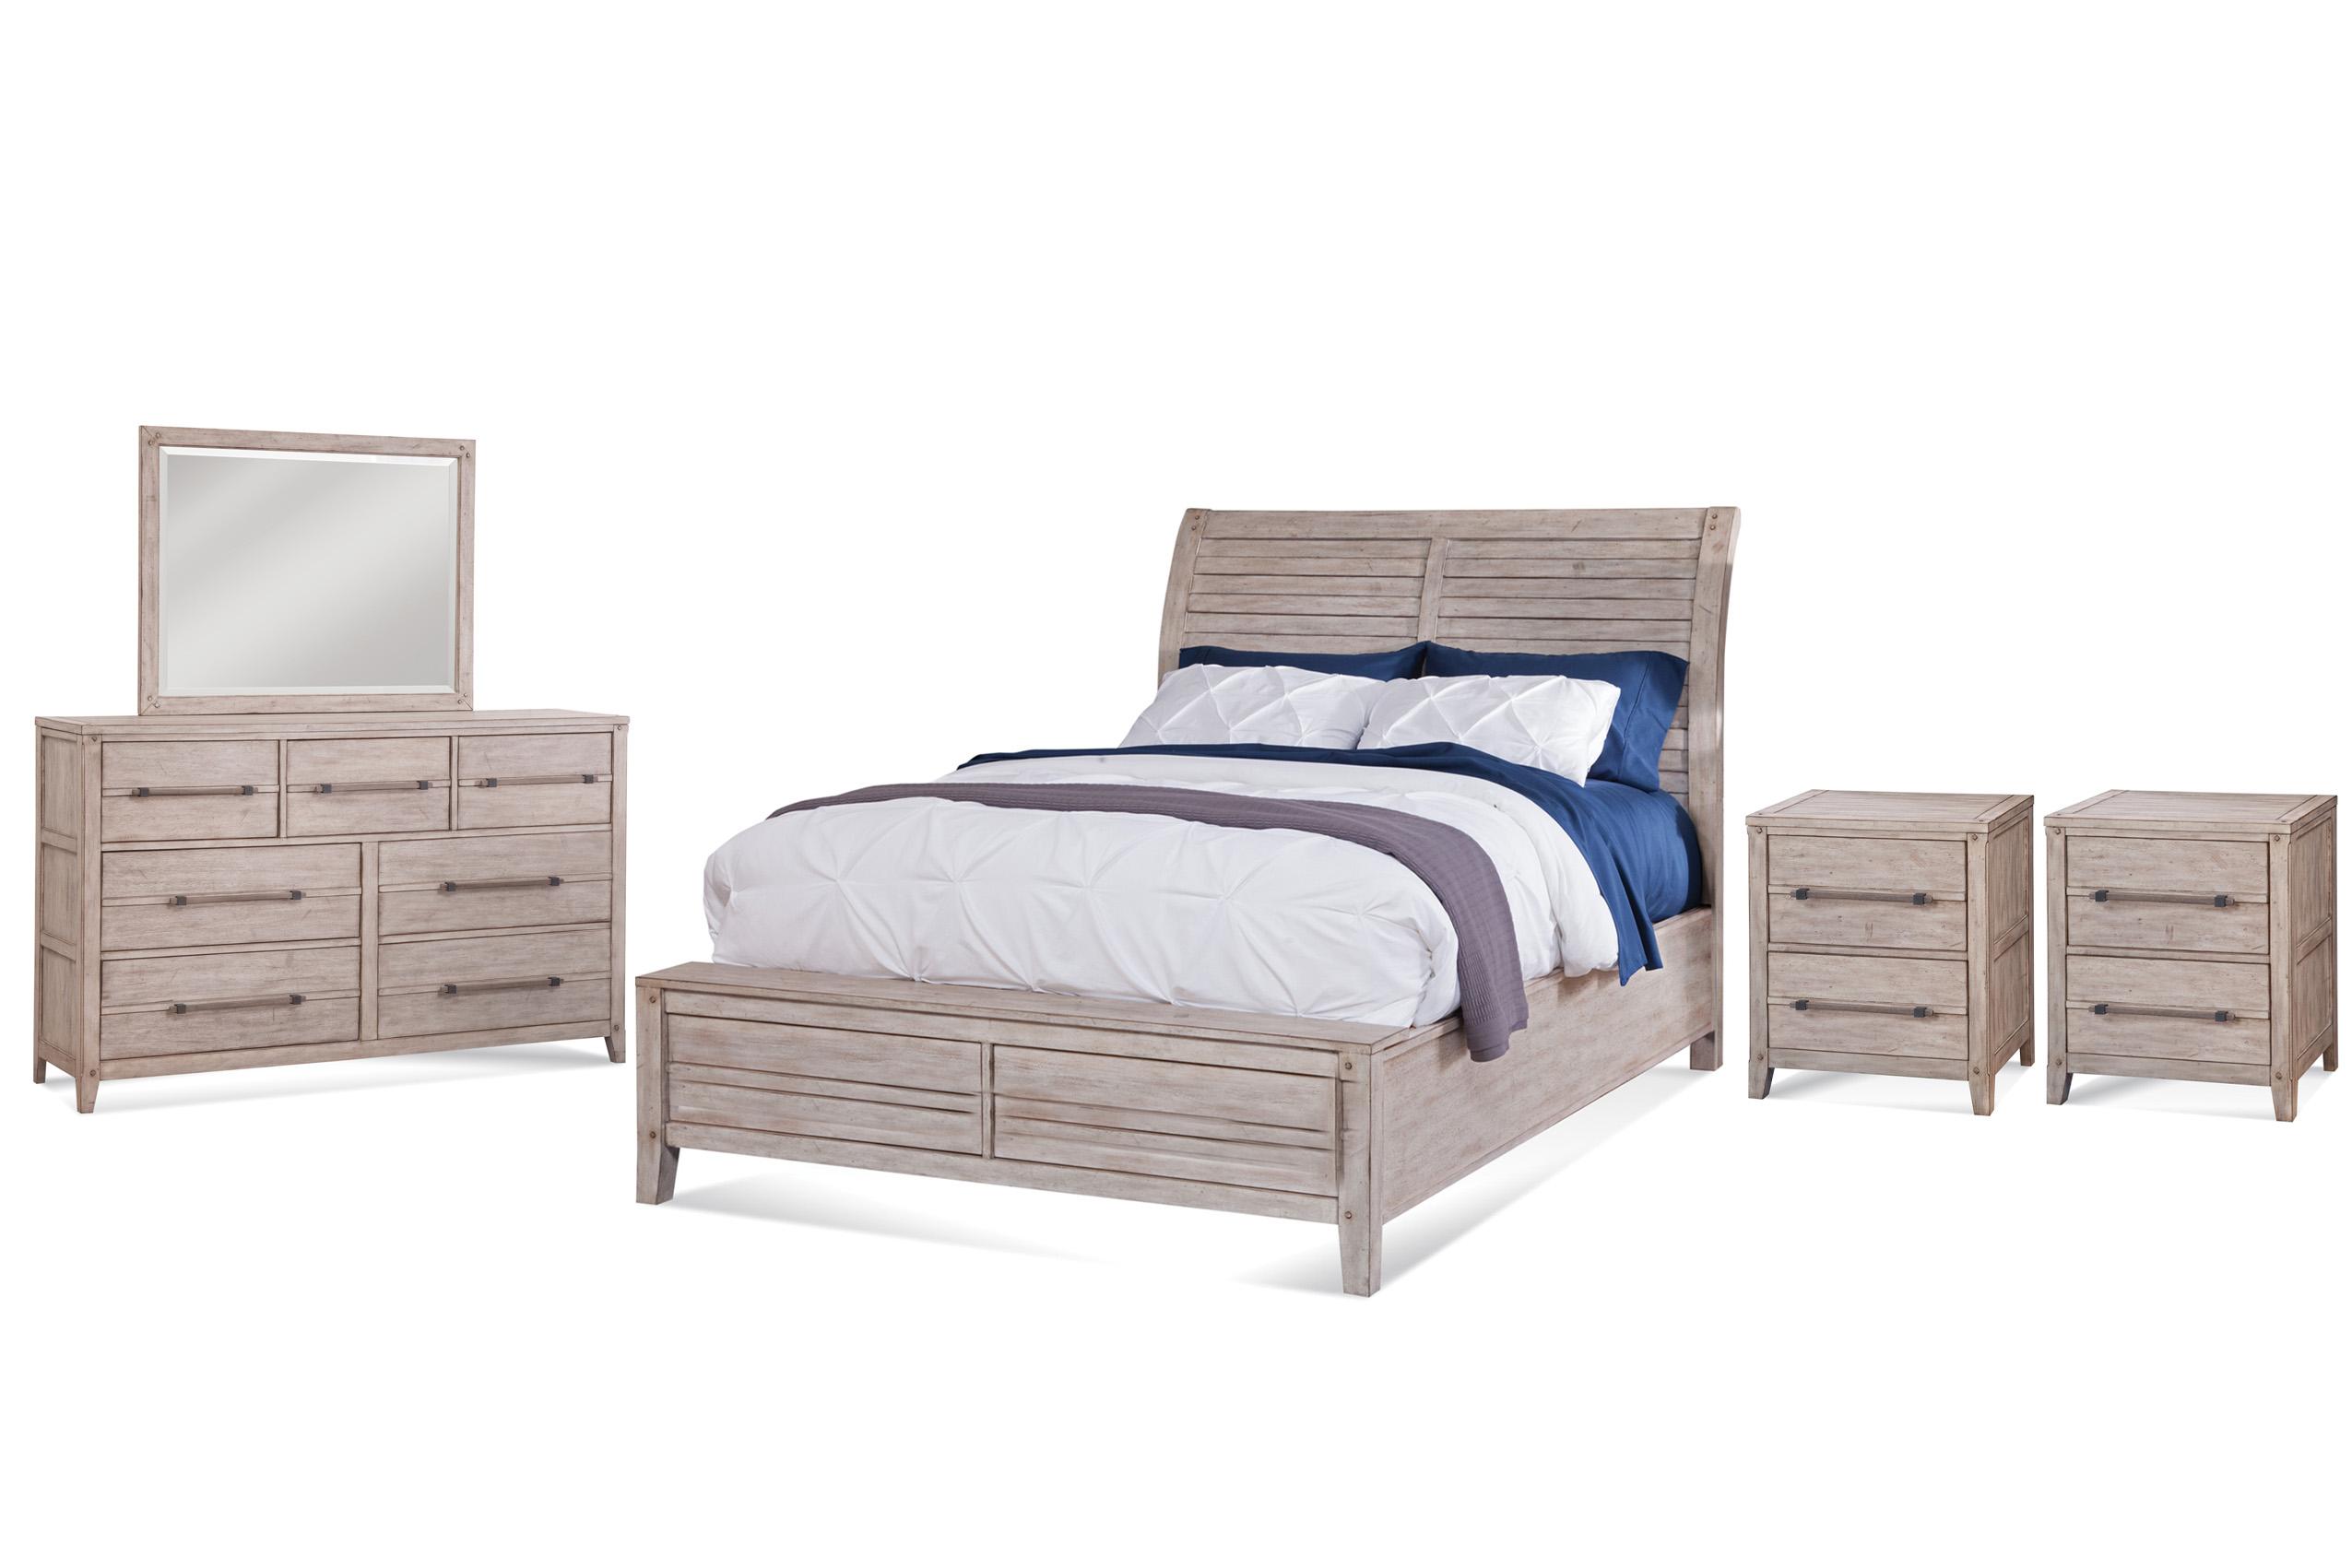 Classic, Traditional Sleigh Bedroom Set AURORA 2810-50SLP 2810-50SLP-2810-420-2NDM-5PC in whitewash 